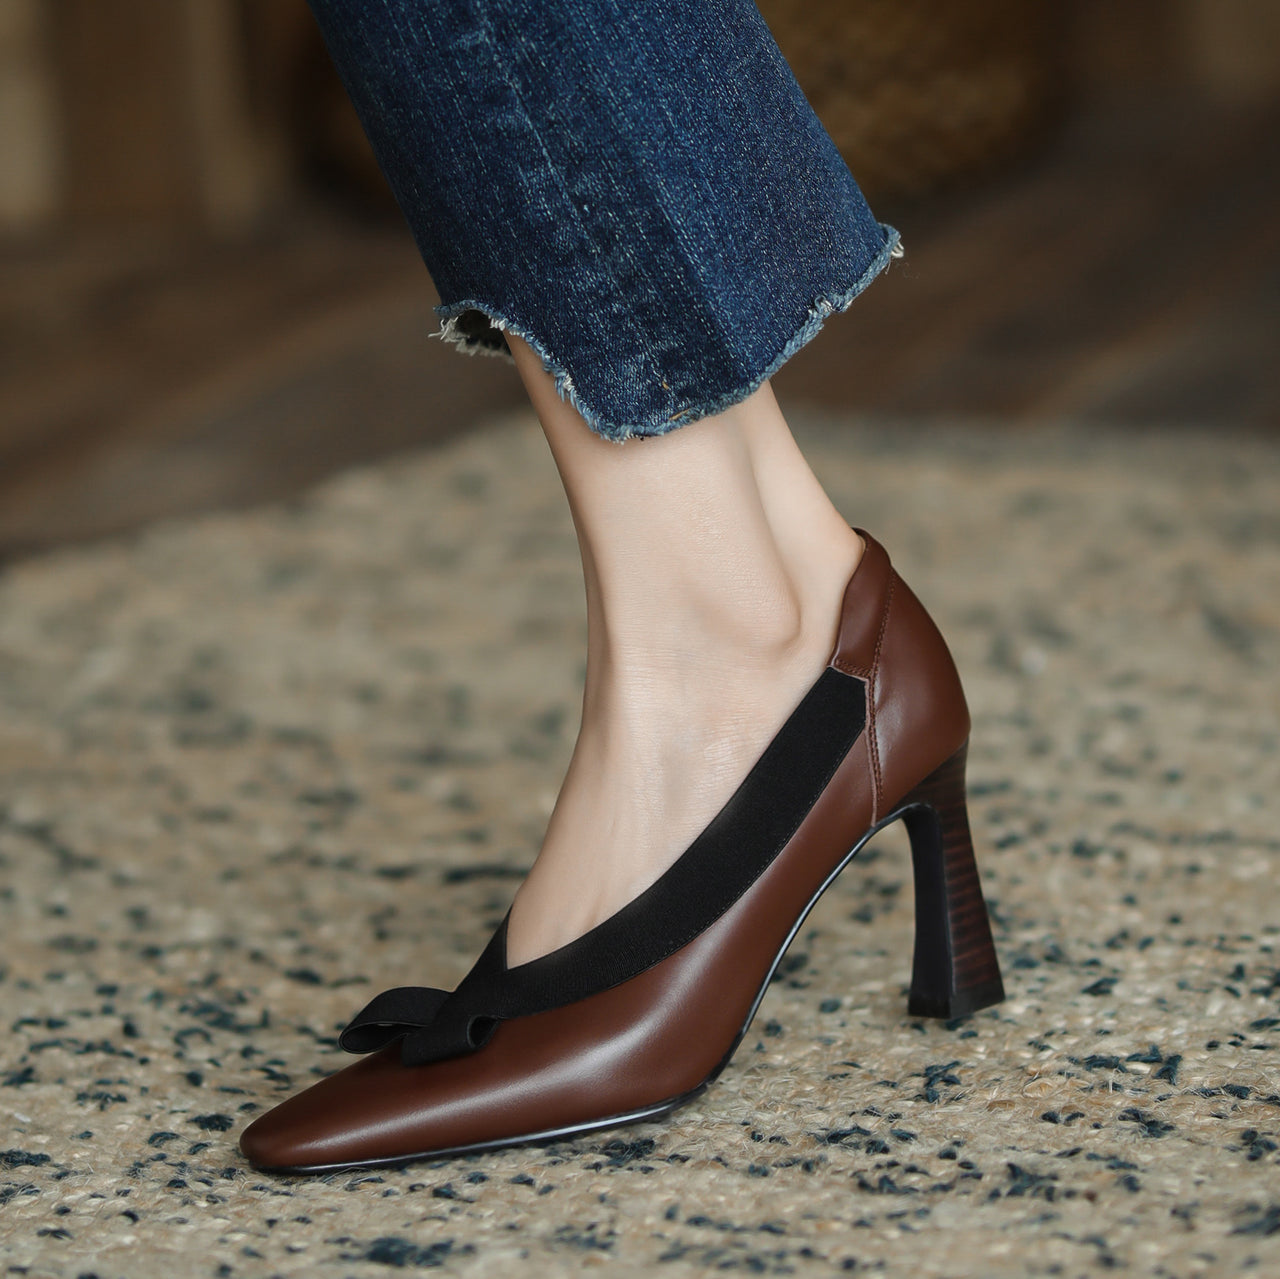 Giana Brown Leather Heels